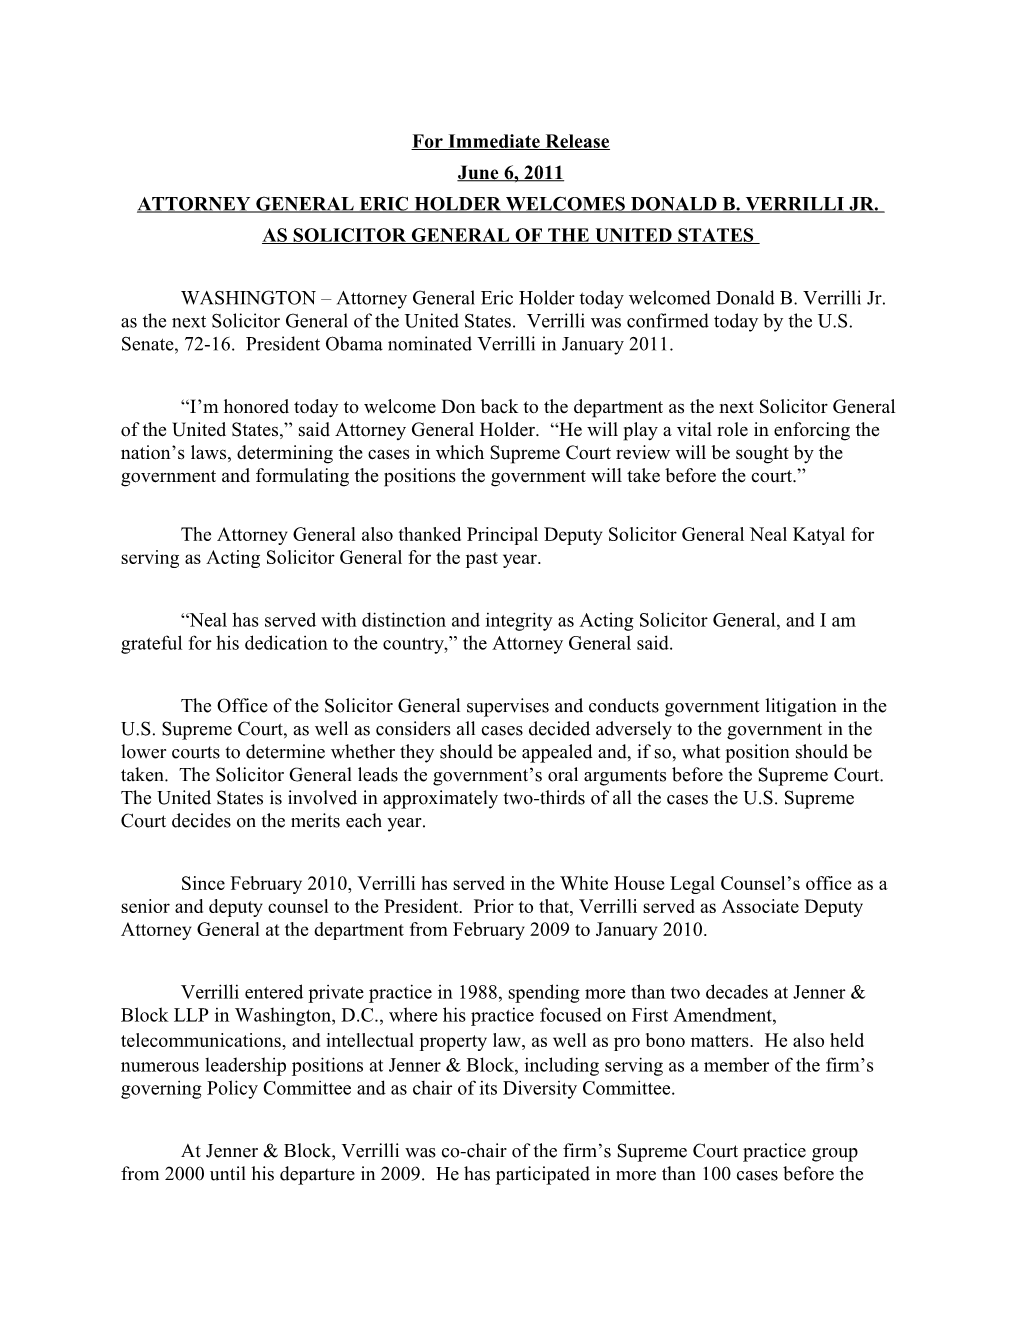 Attorney General Eric Holder Welcomes Donald B. Verrilli Jr